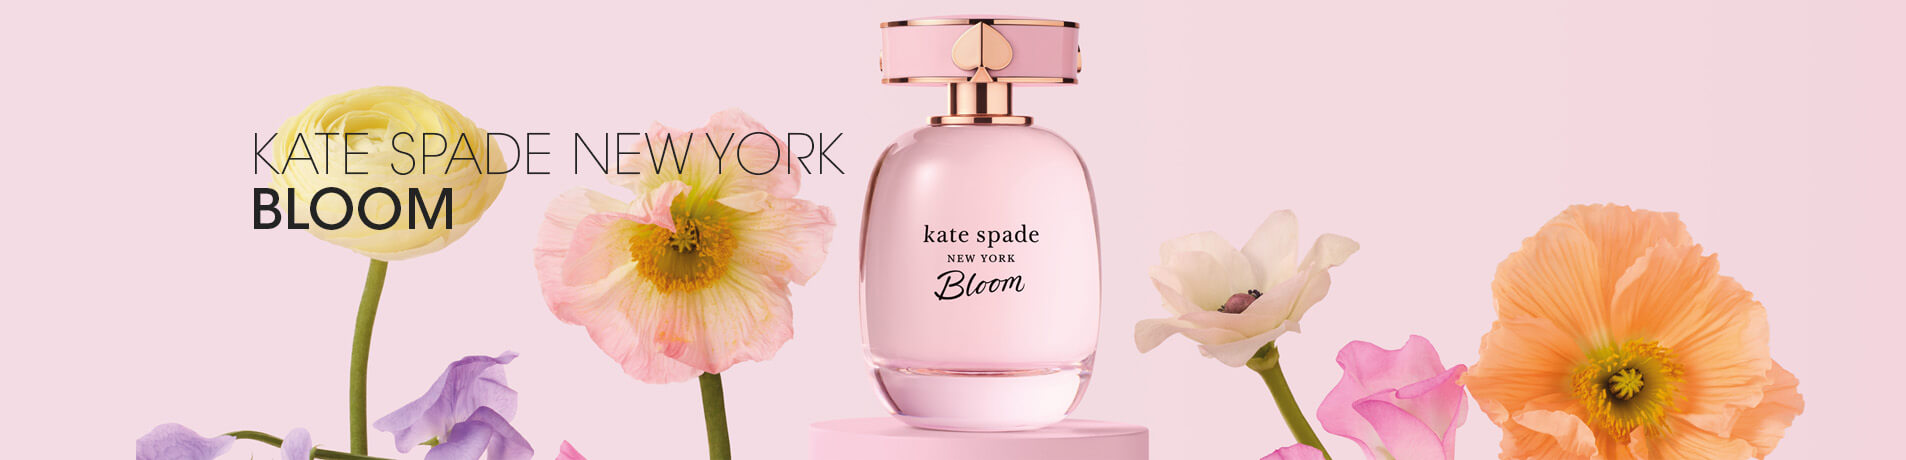 Kate Spade New York Bloom